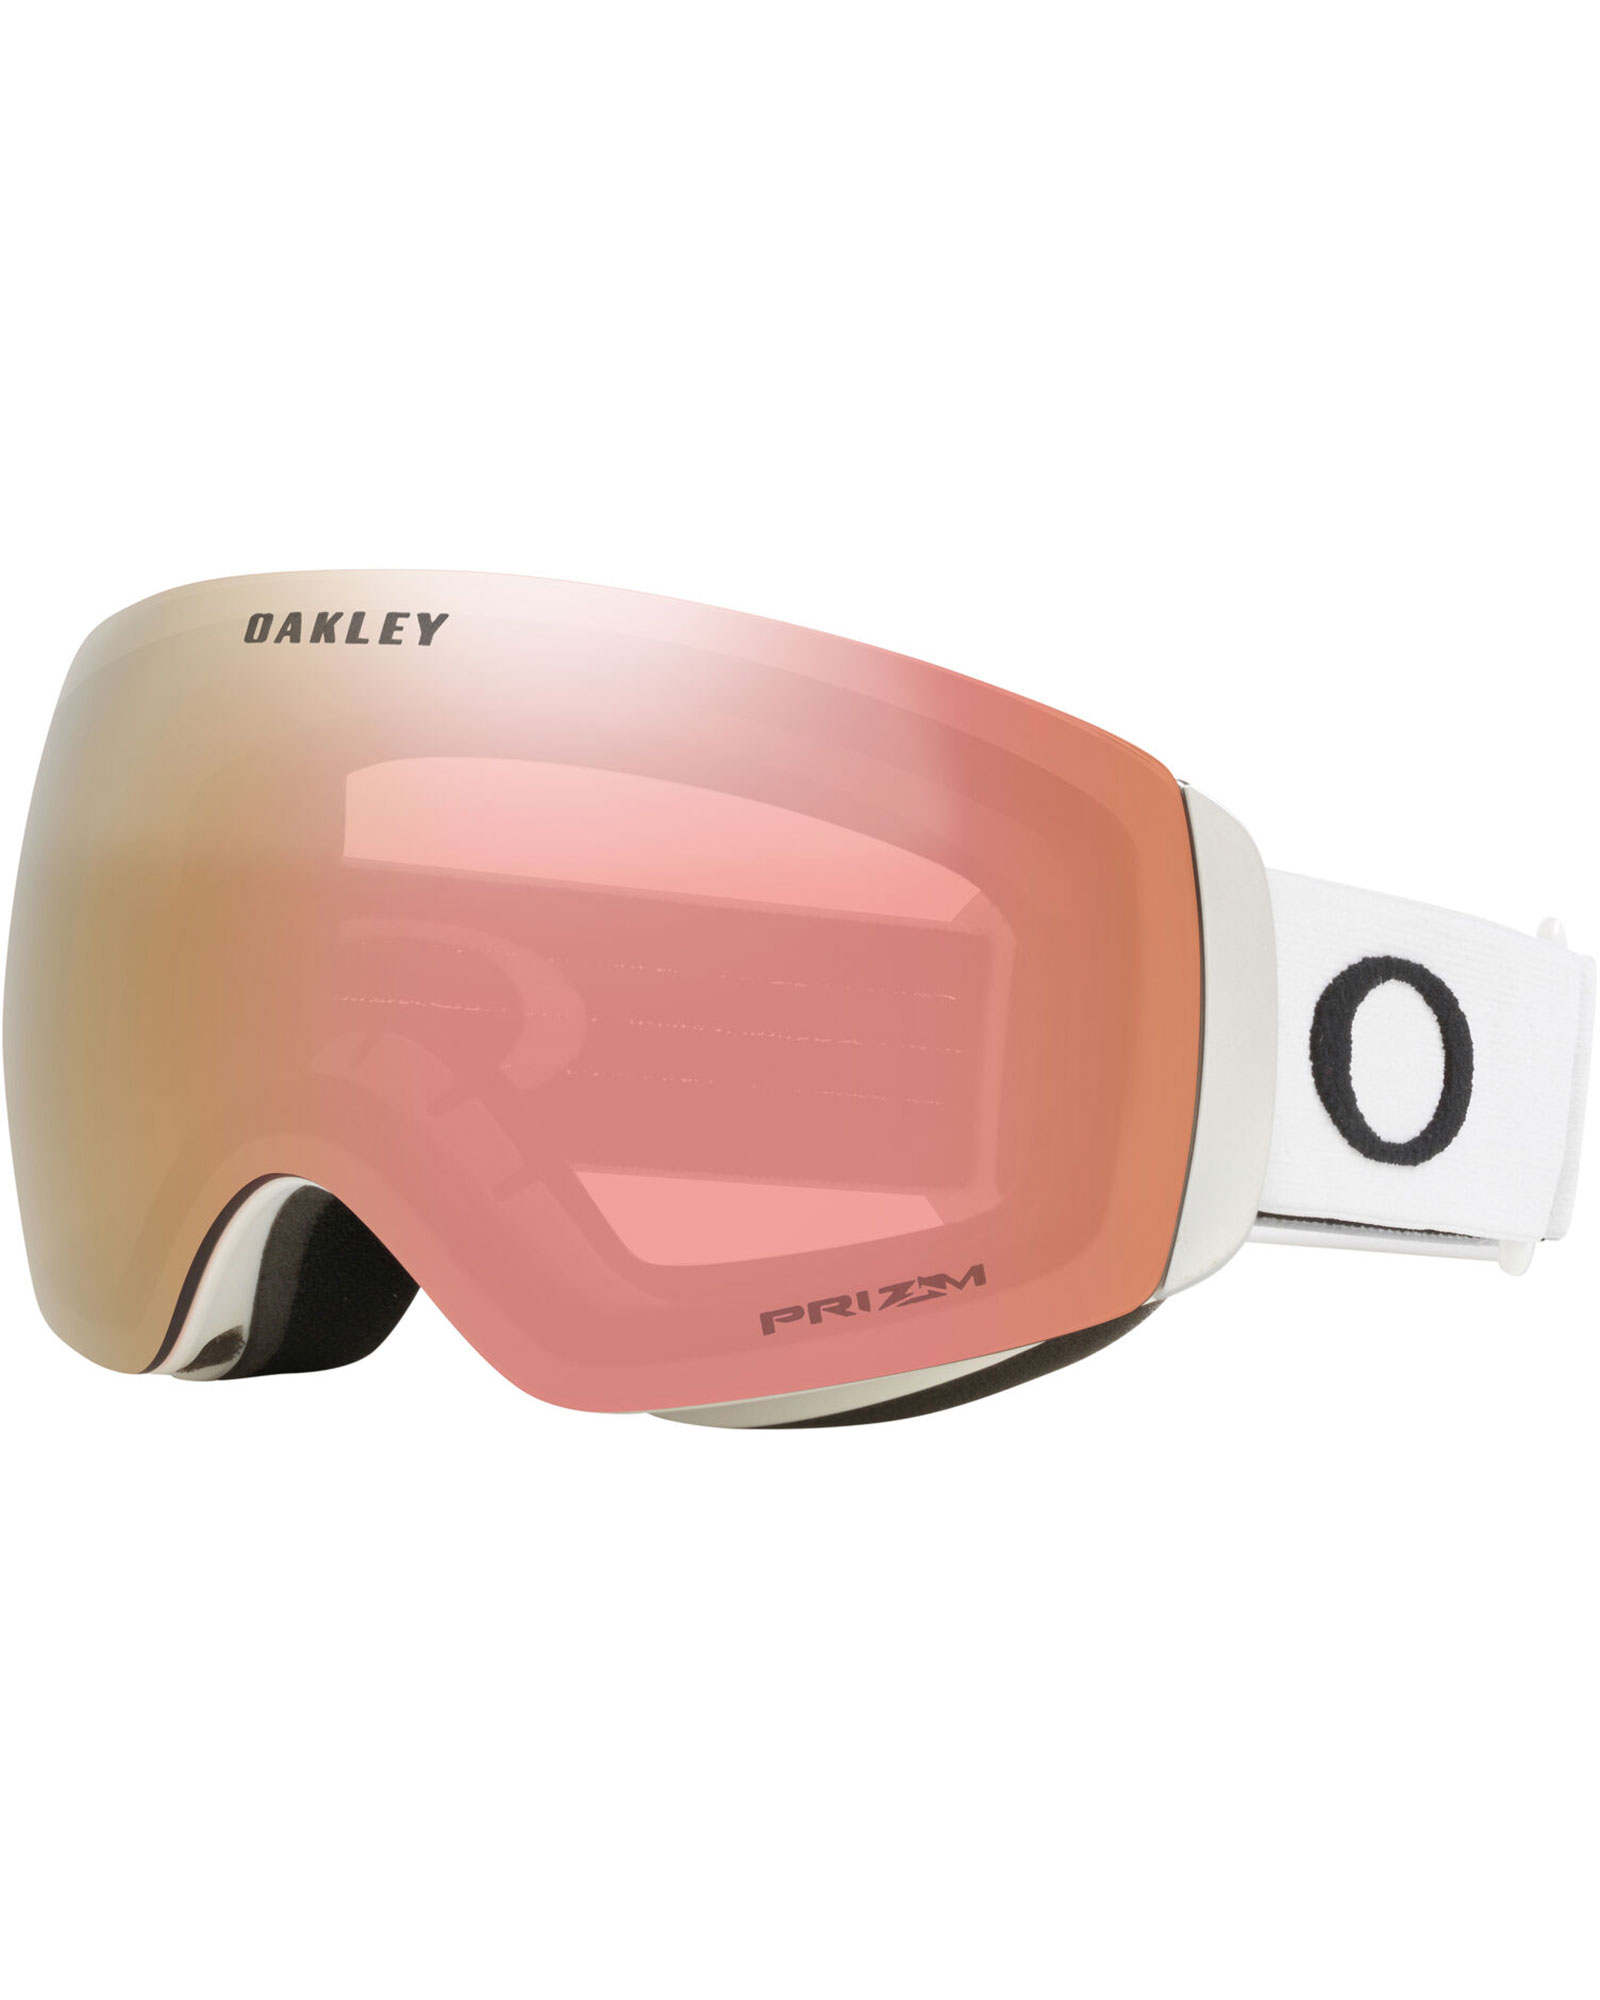 Oakley Flight Deck M Matte White / Prizm Rose Gold Iridium Goggles